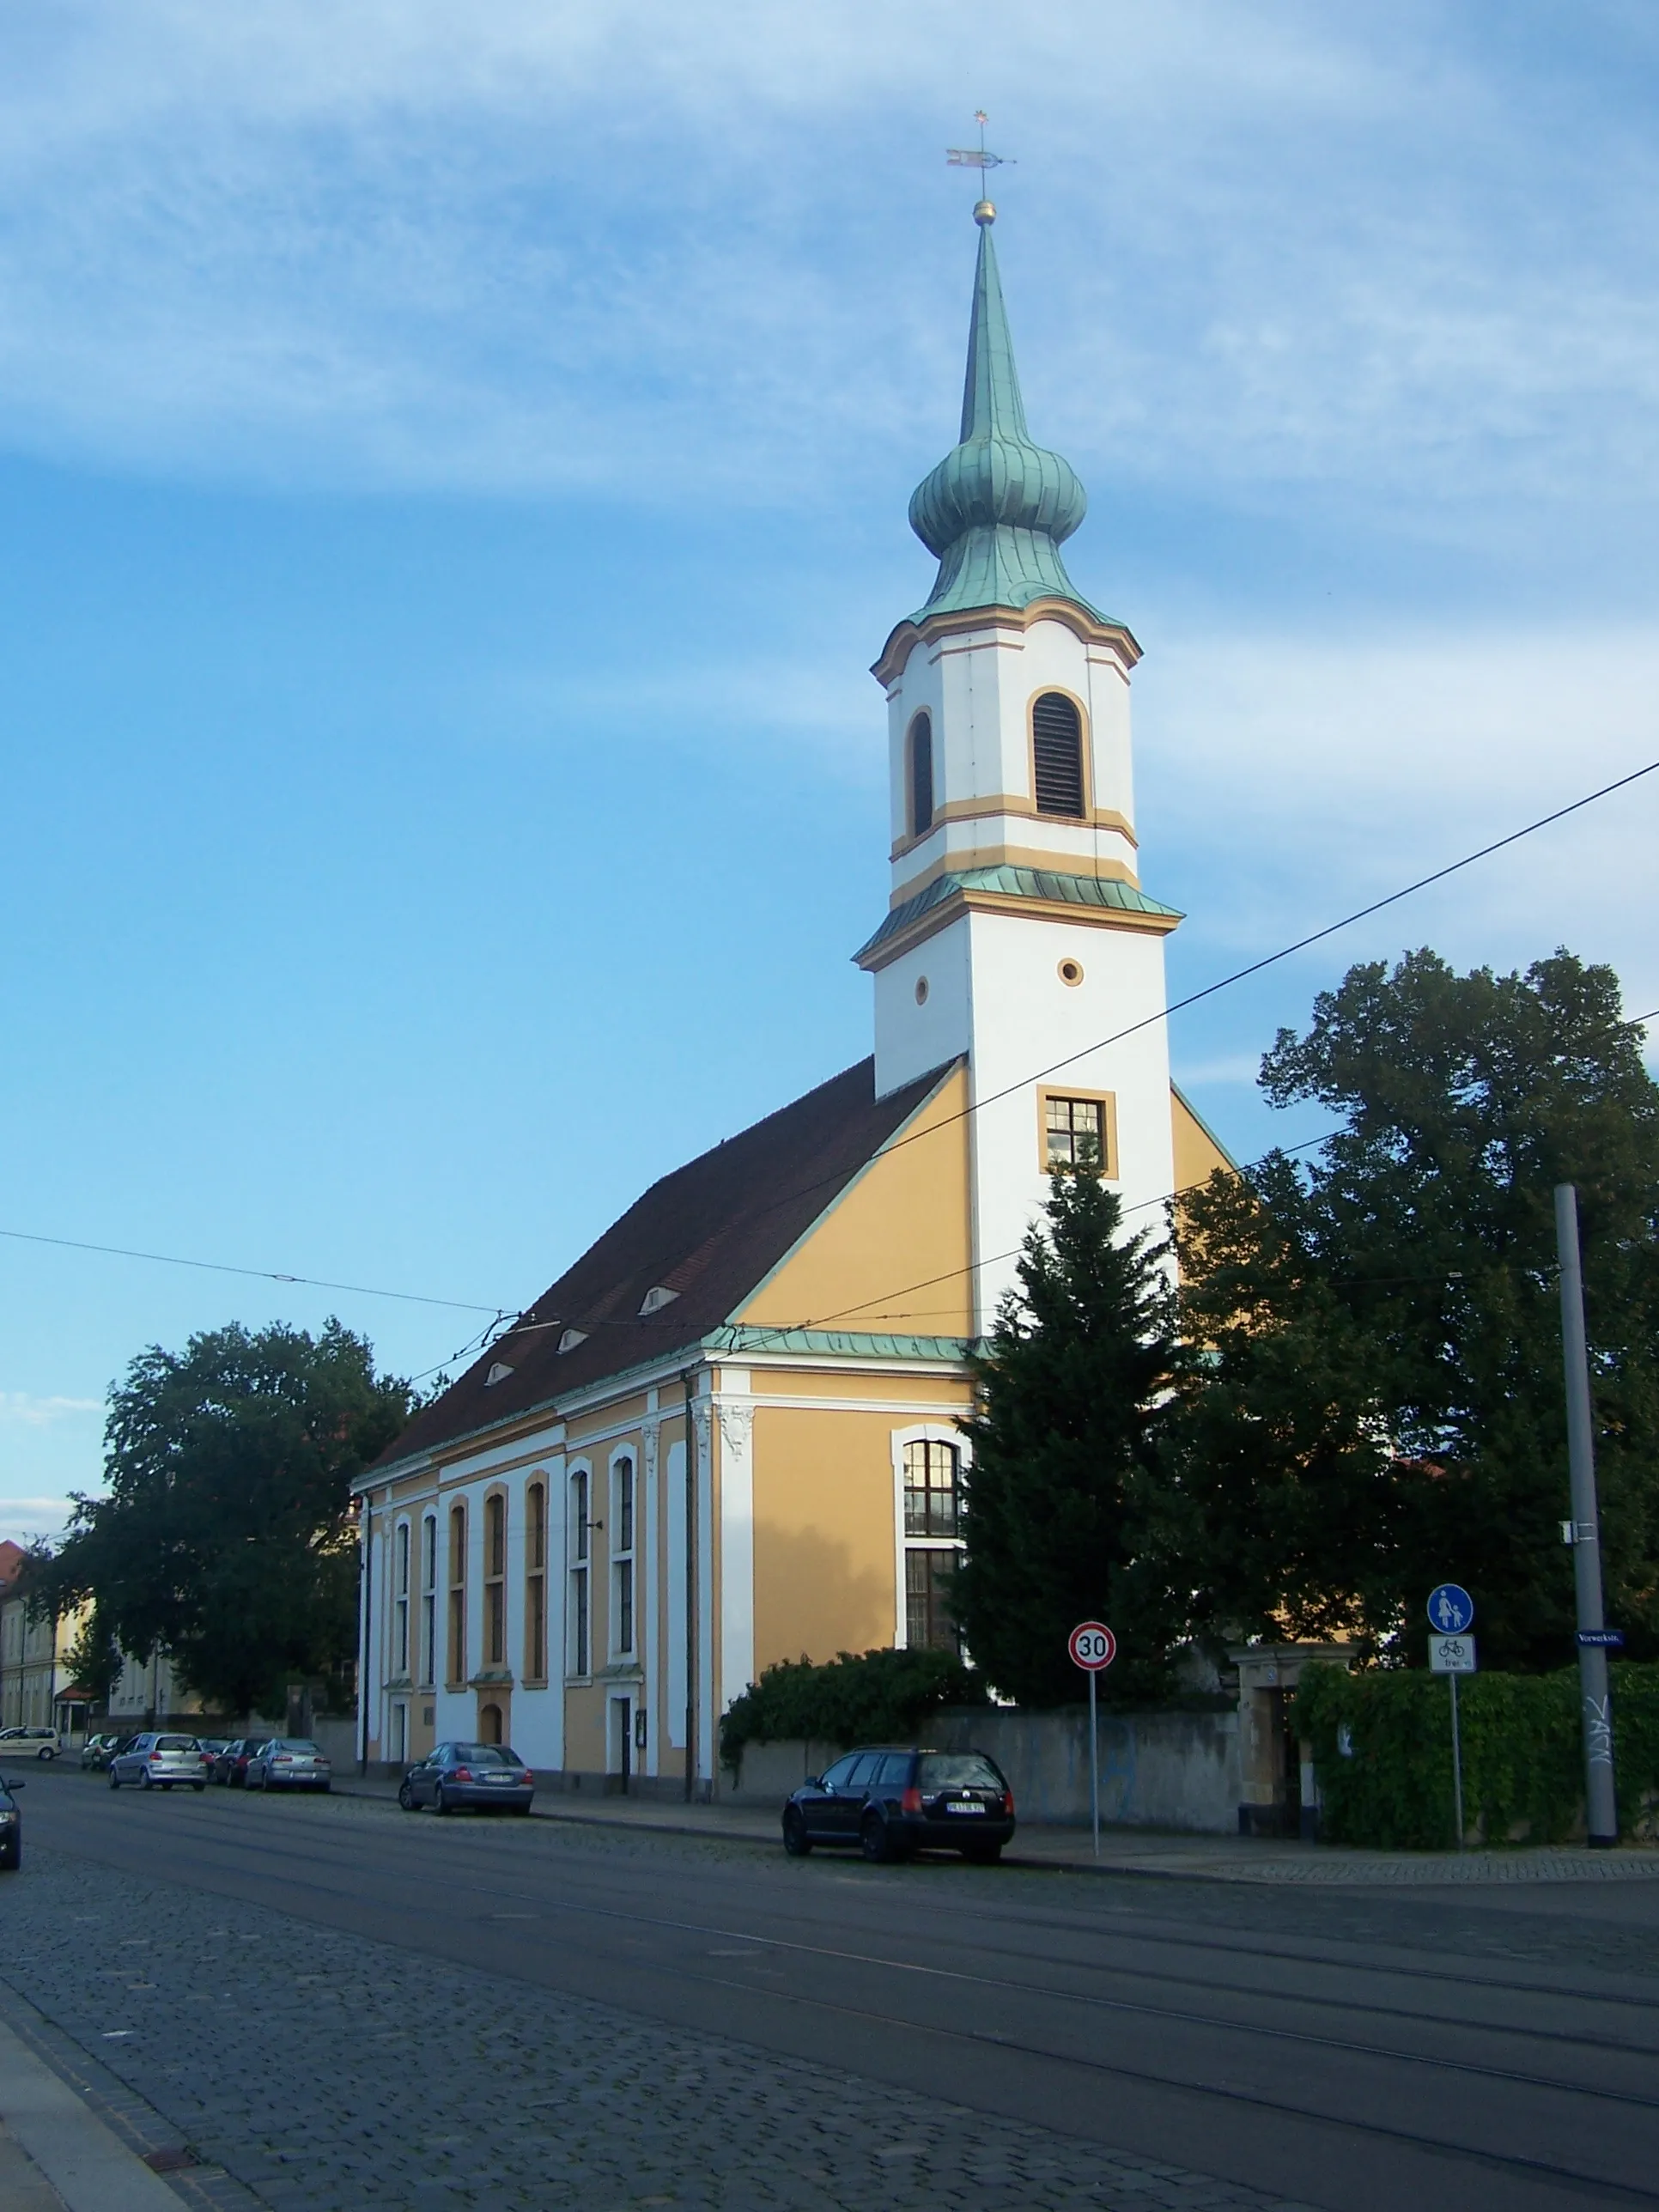 Image of Friedrichstadt